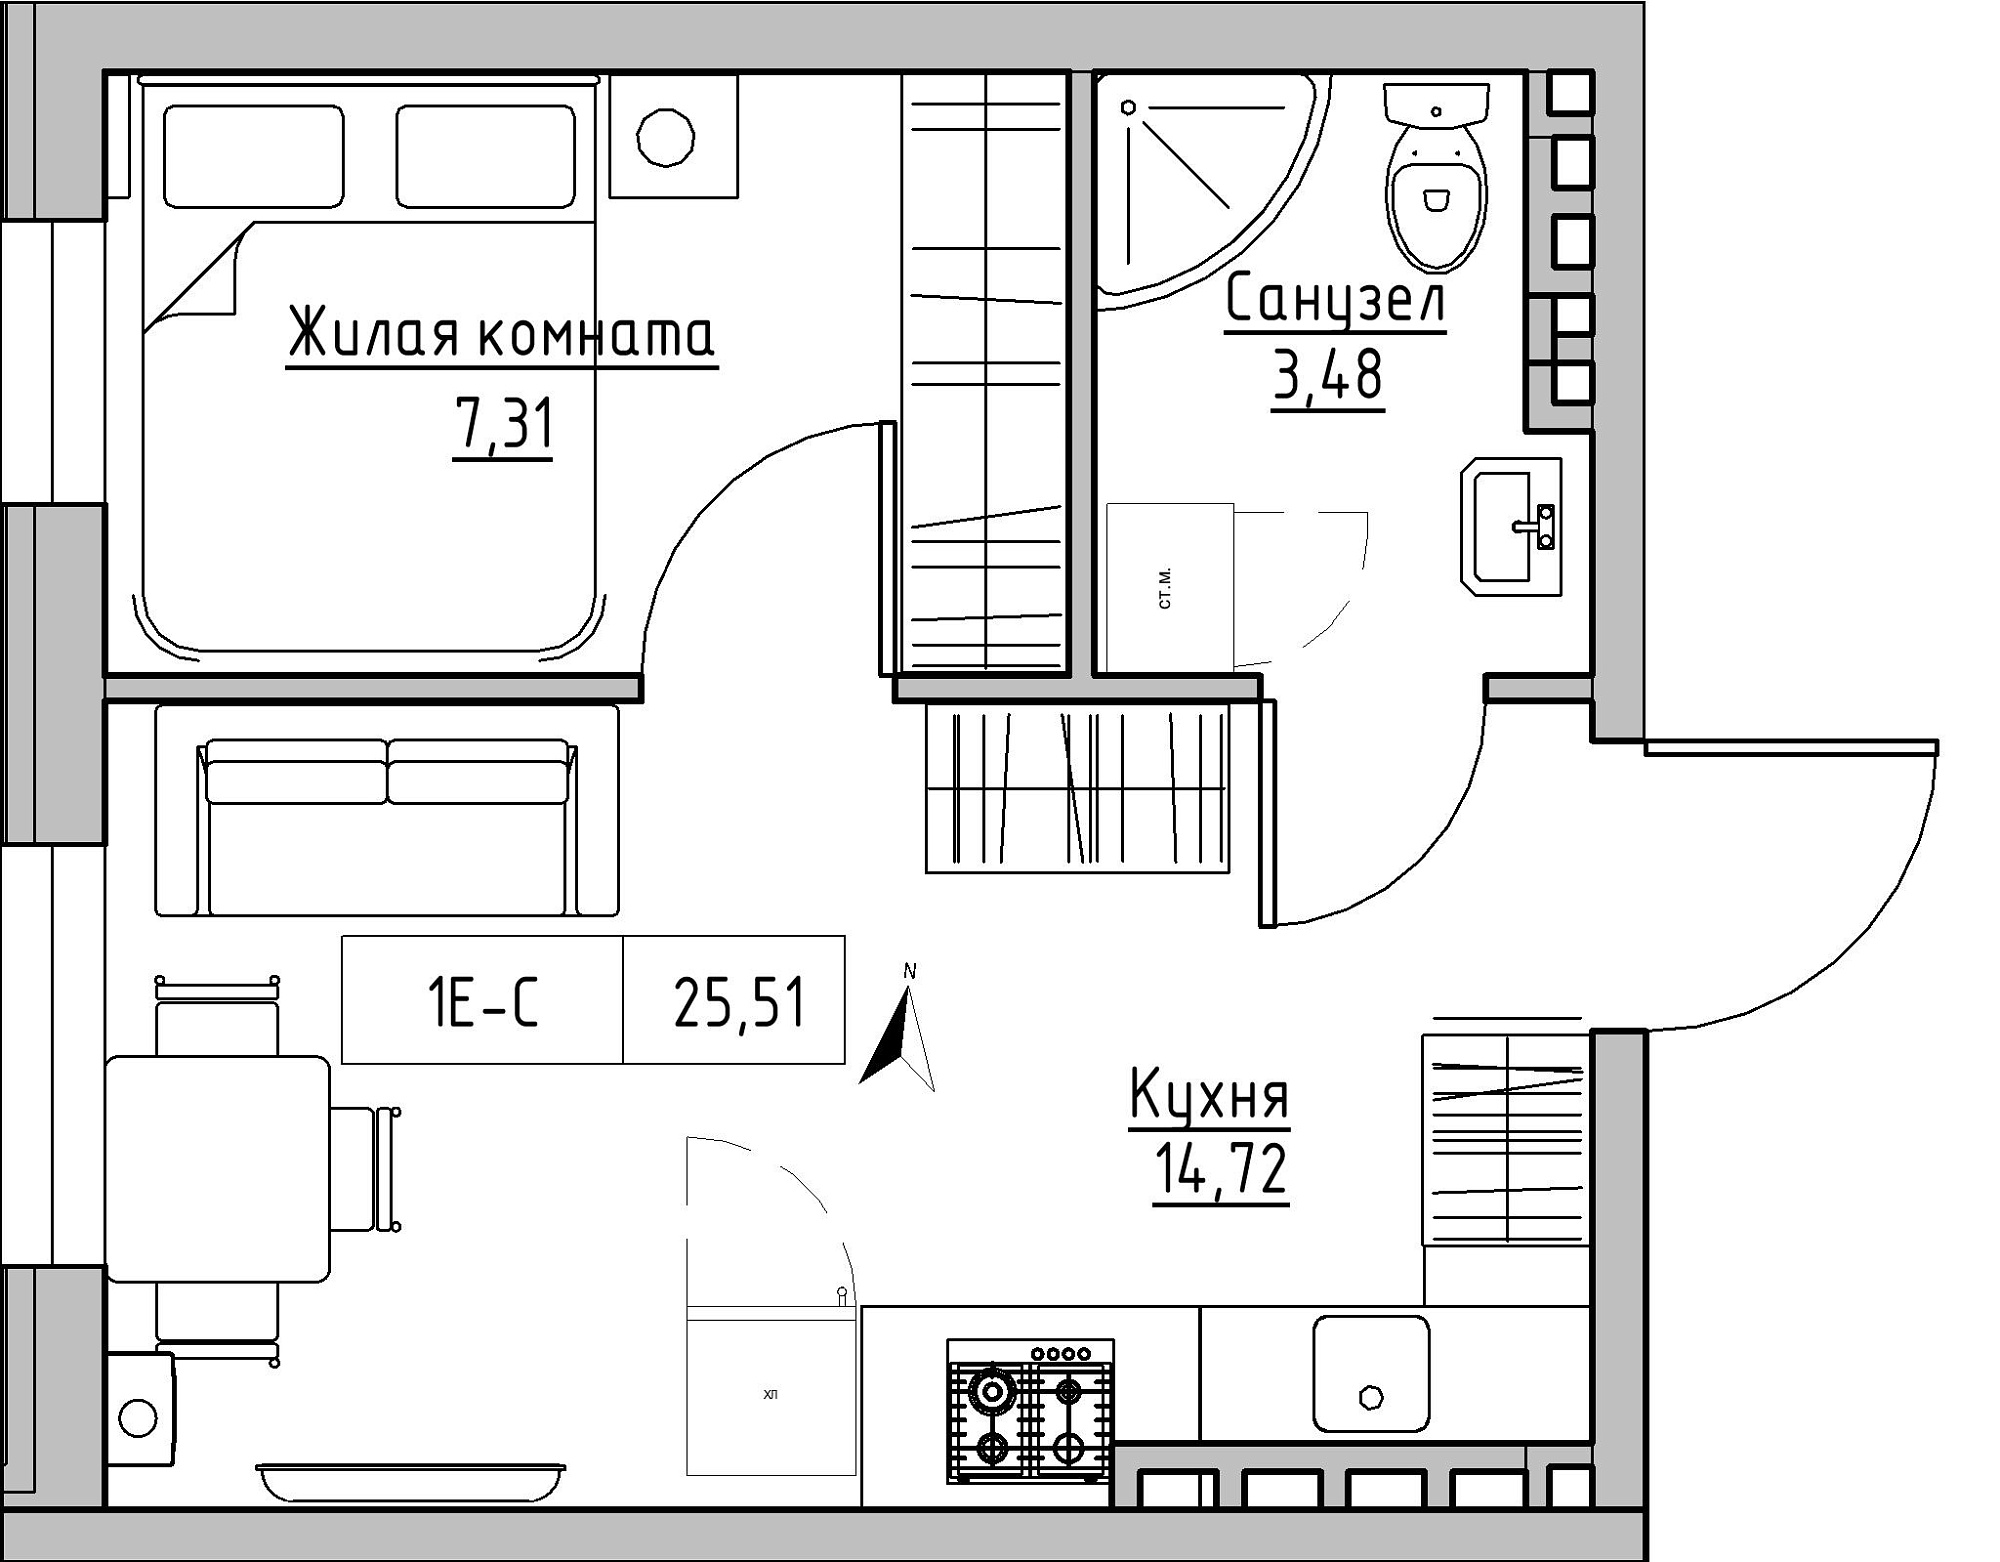 Planning 1-rm flats area 25.51m2, KS-024-05/0015.